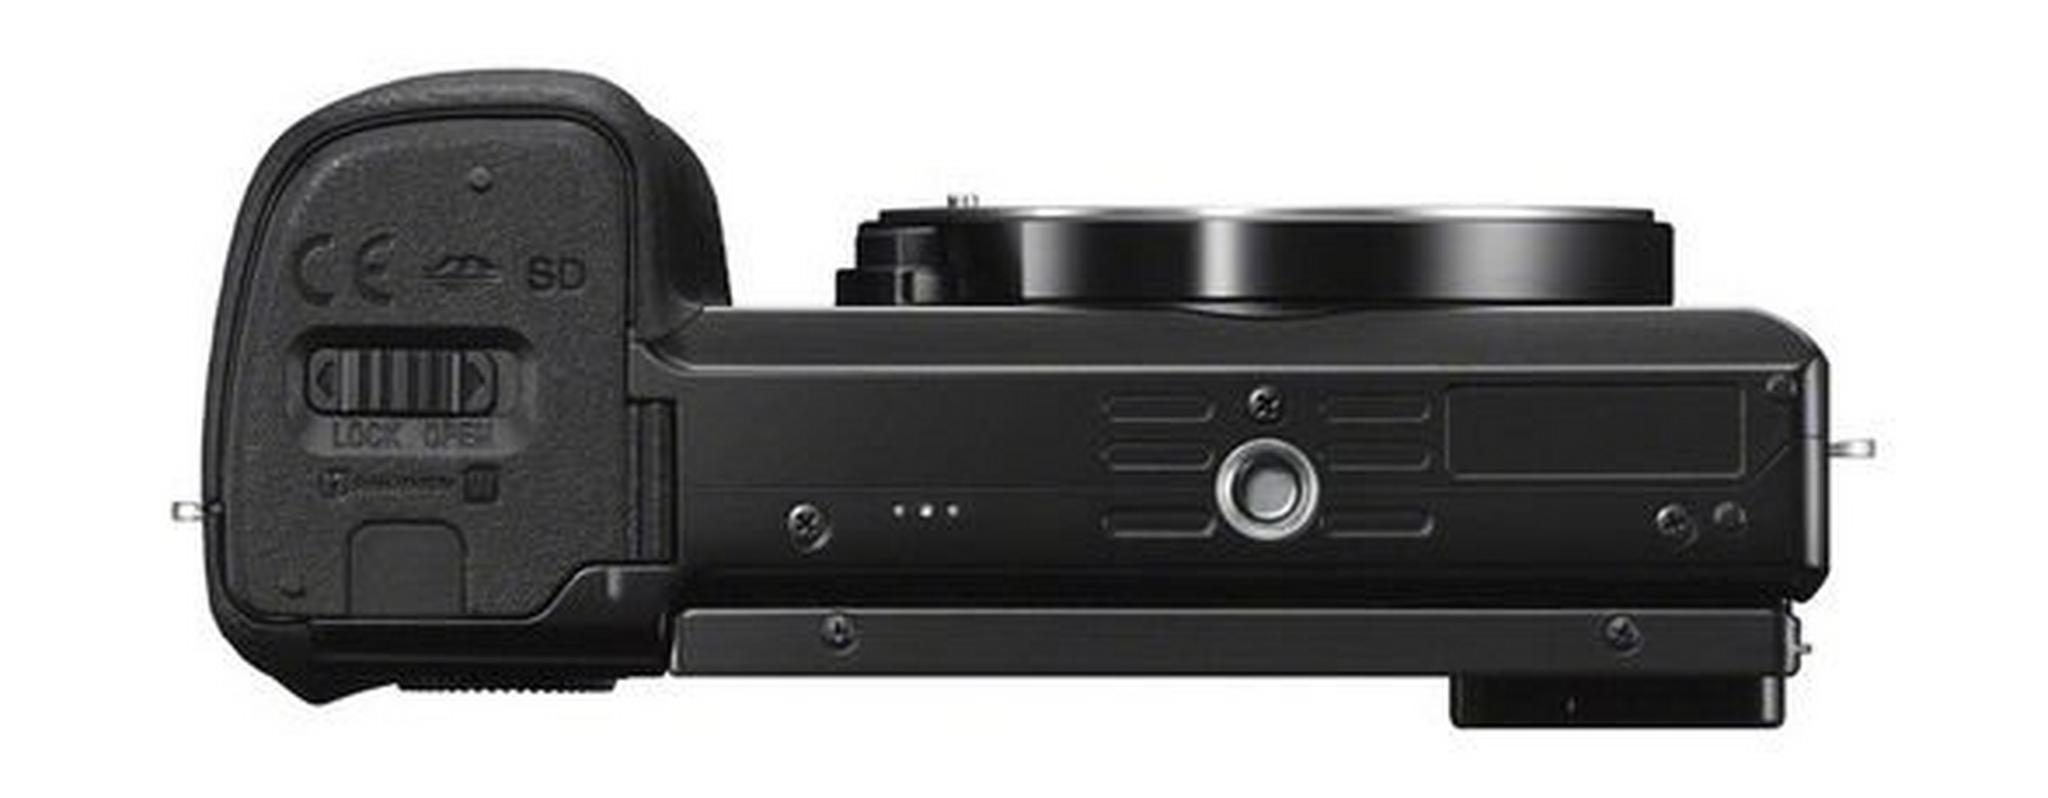 Sony Alpha a6000 Mirrorless Digital Camera with 16-50mm Lens - Black